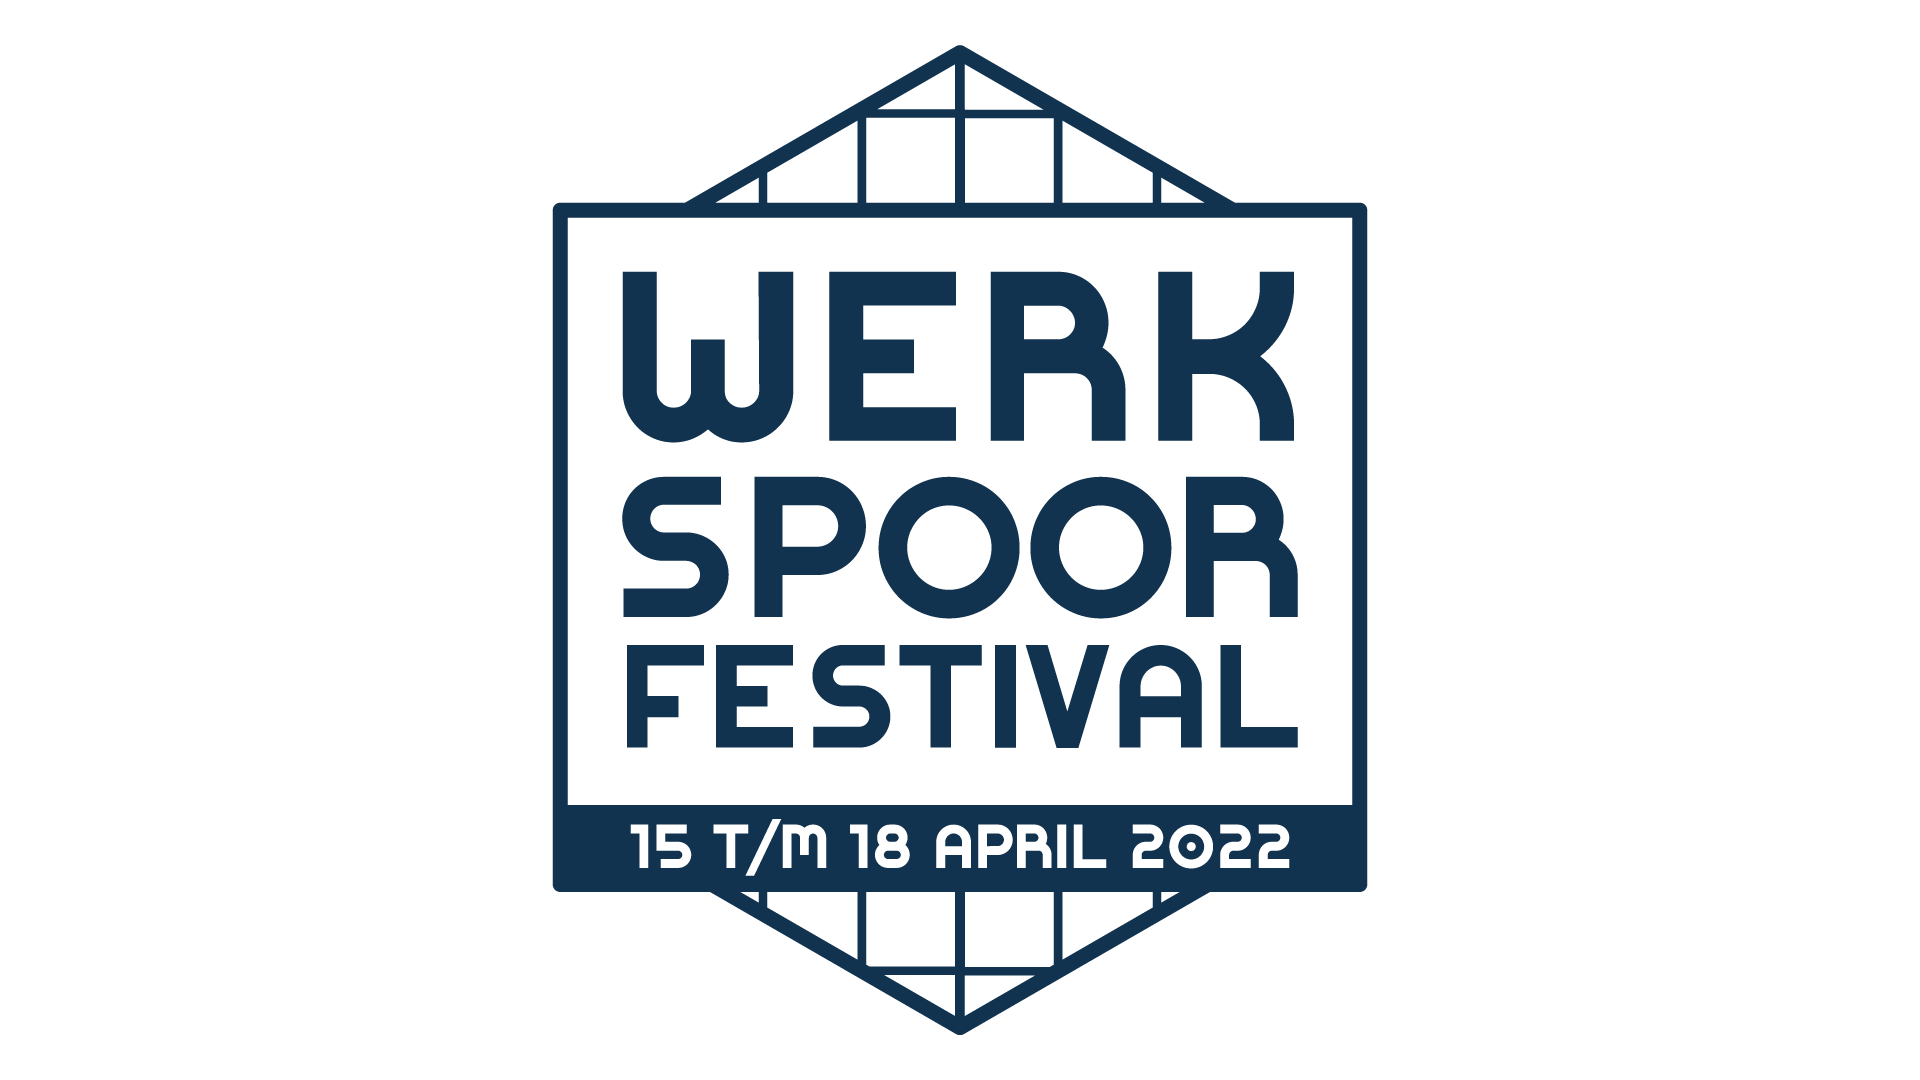 Werkspoor Festival